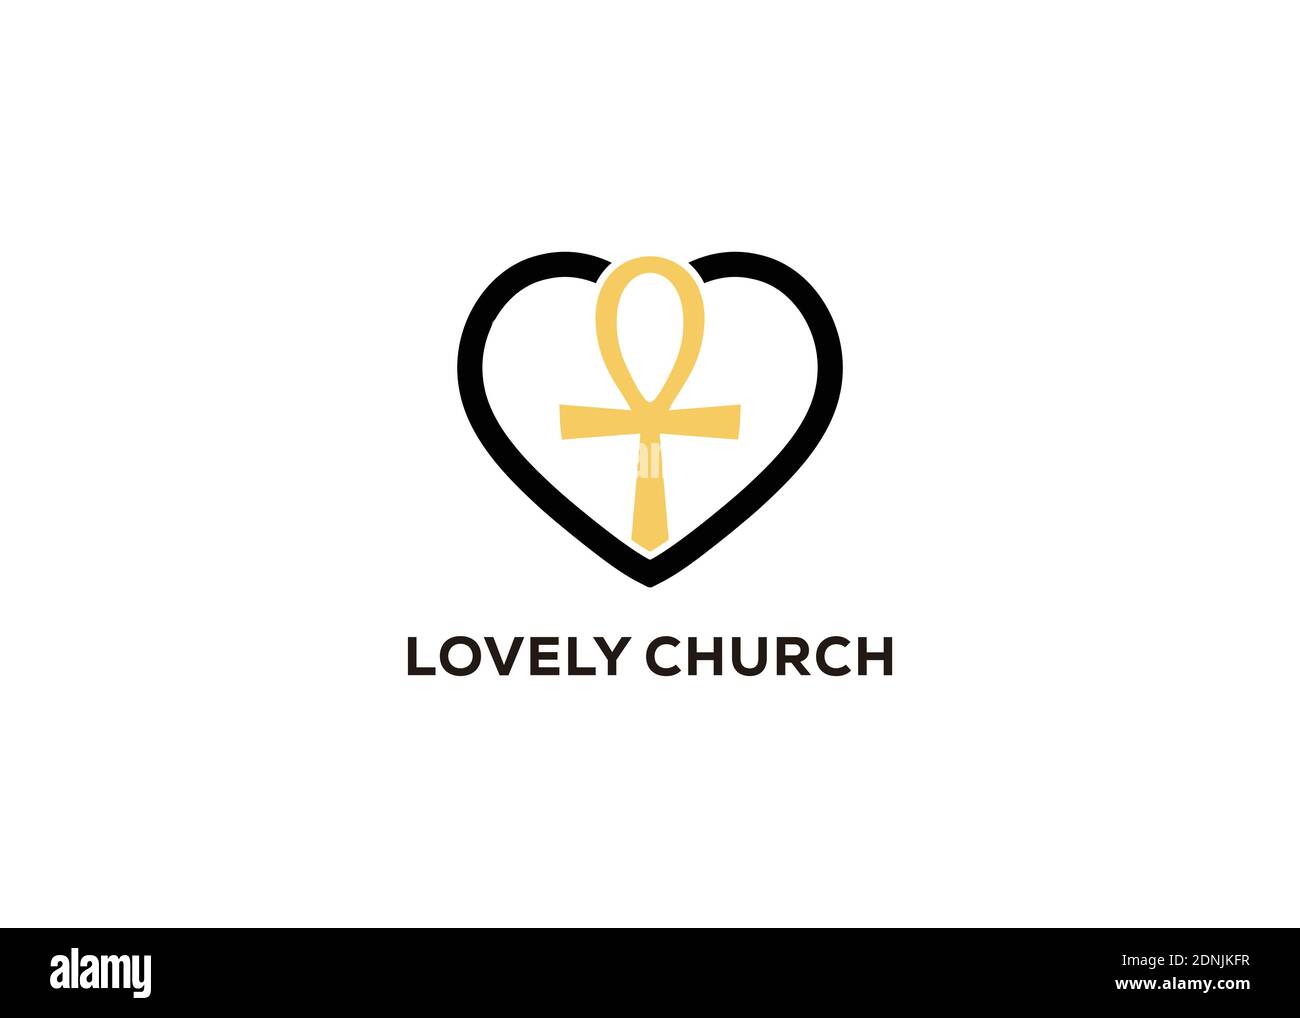 symbol lovely church Logo Template Design inspiration Stock Vector